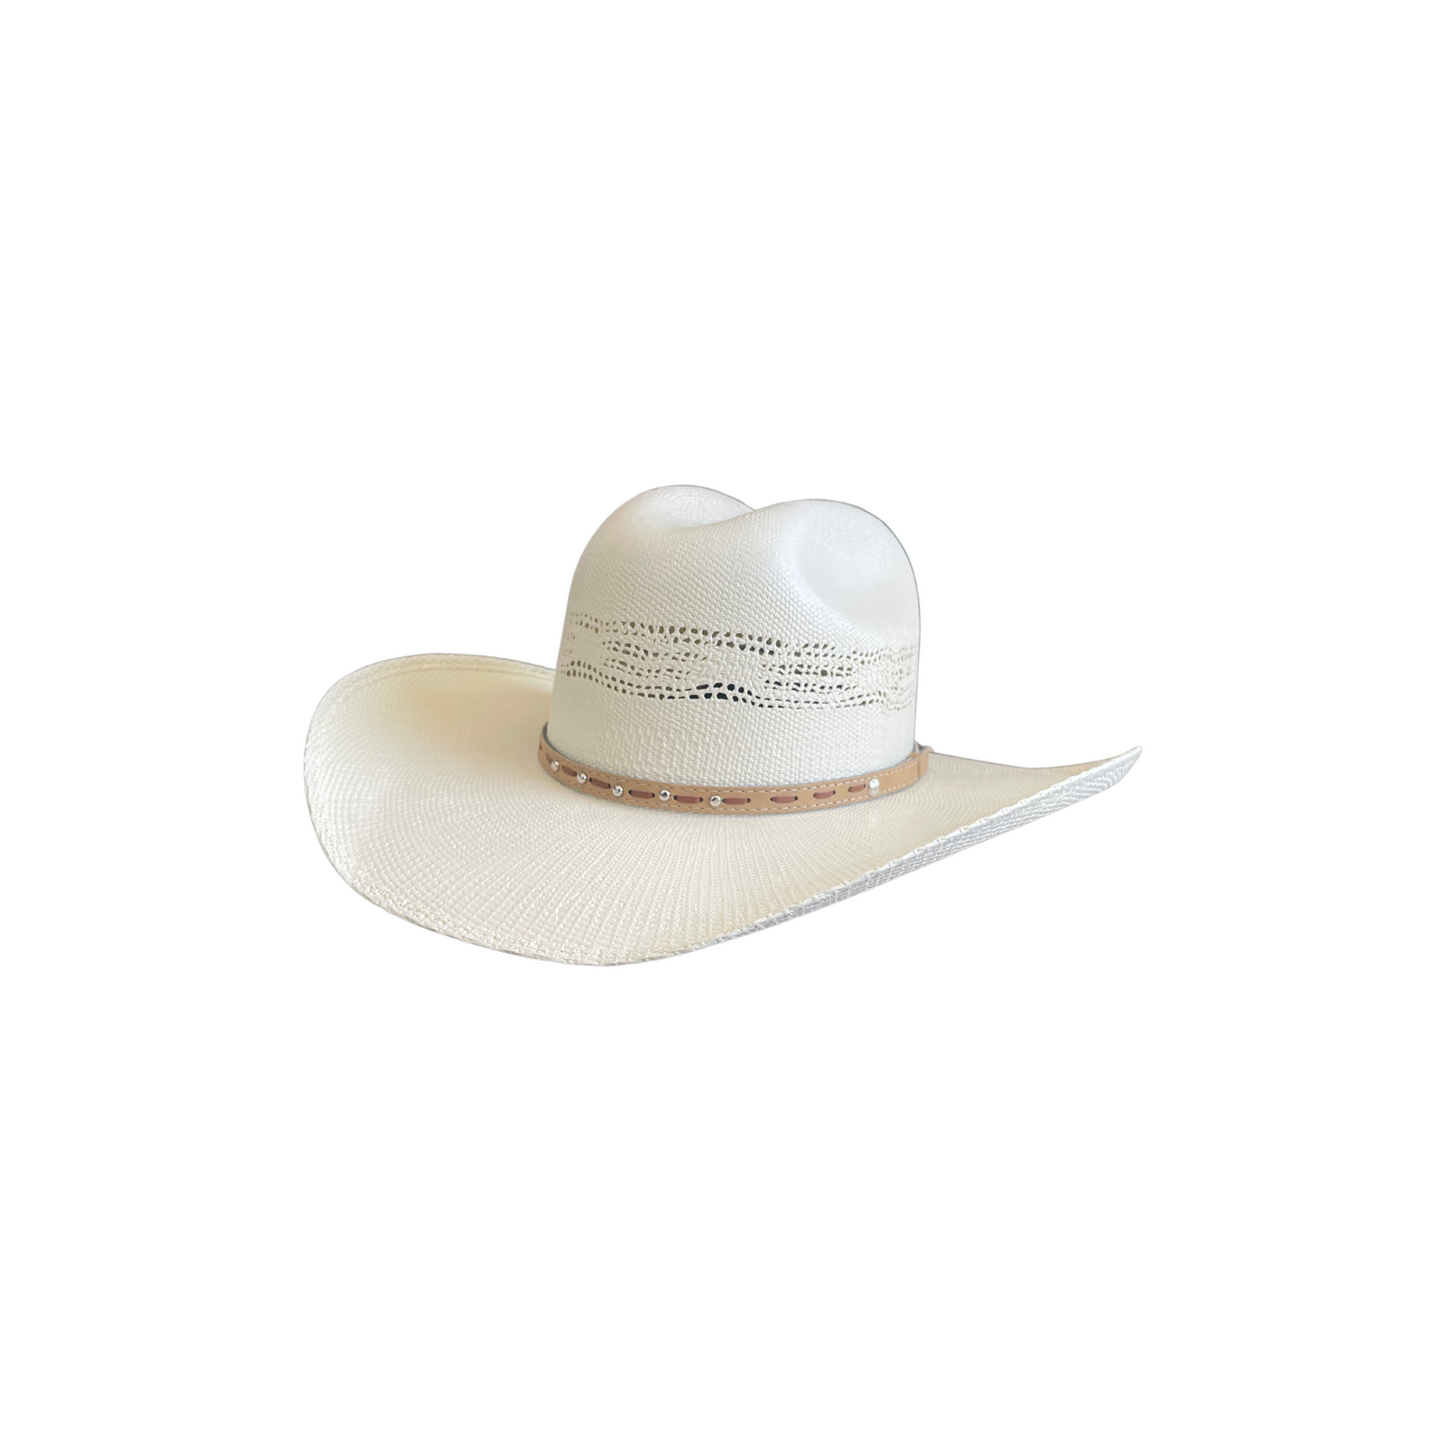 White Straw Western Style Hat